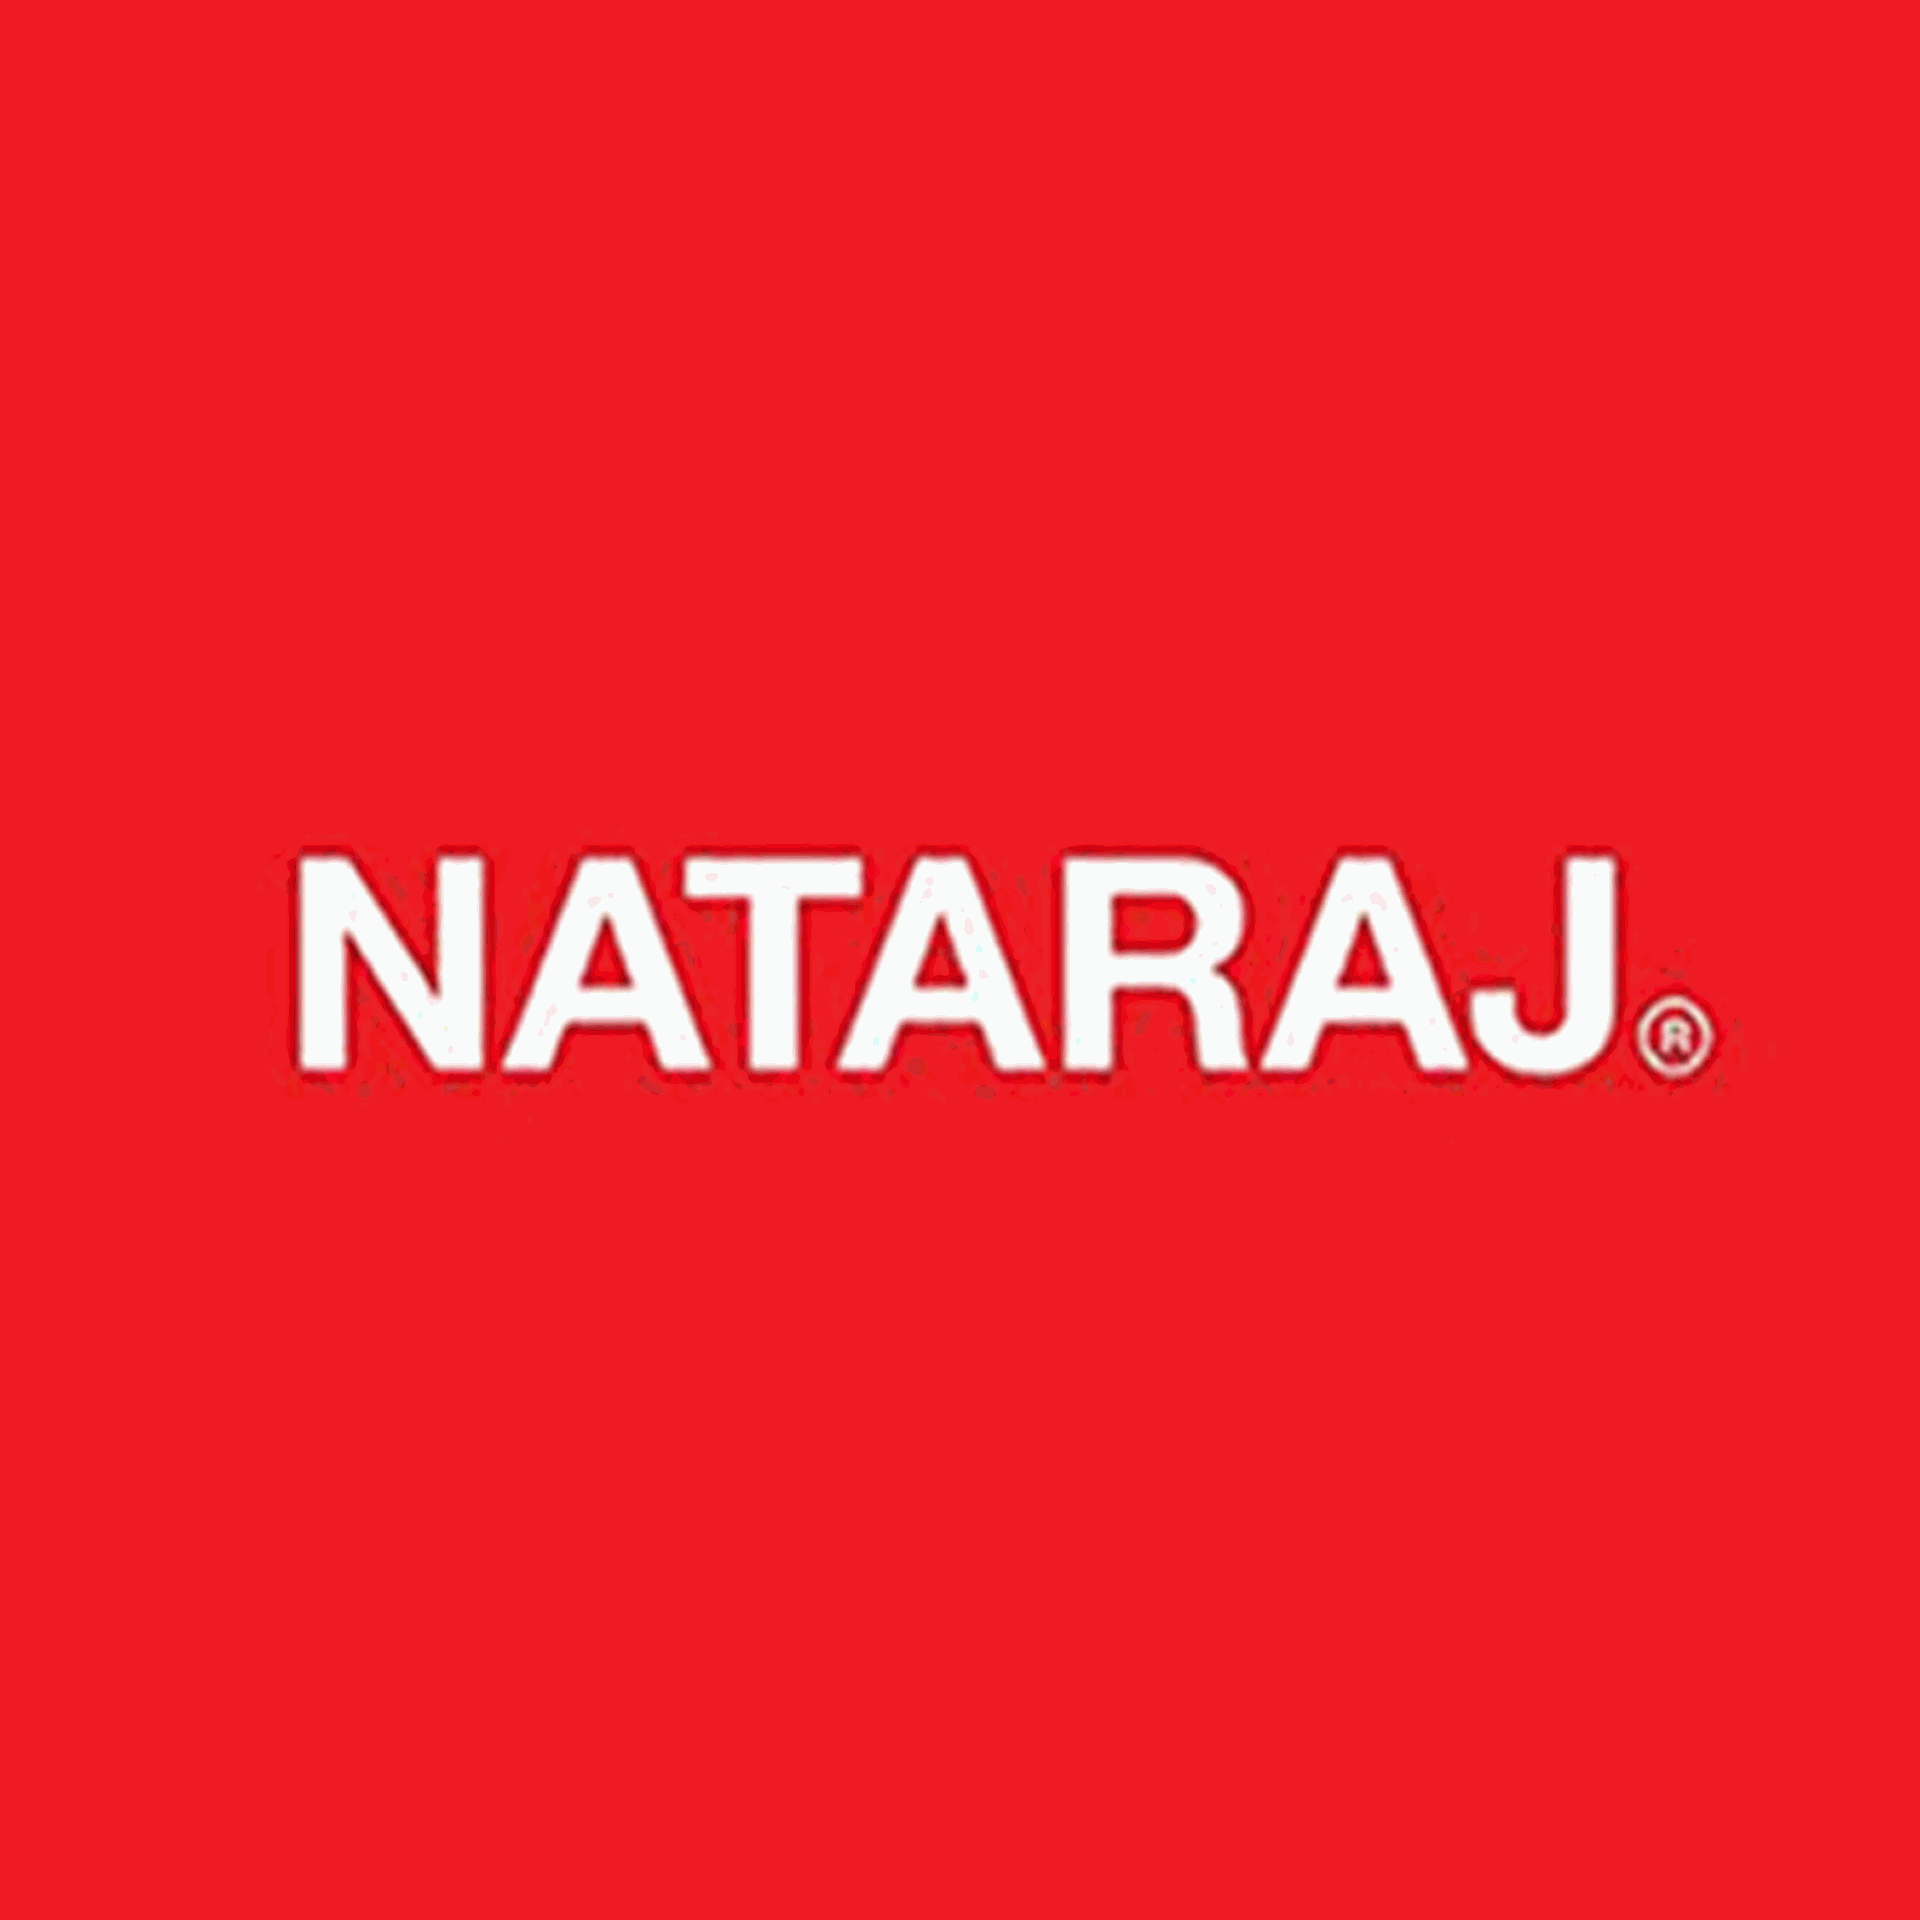 Product Brand: NATARAJ